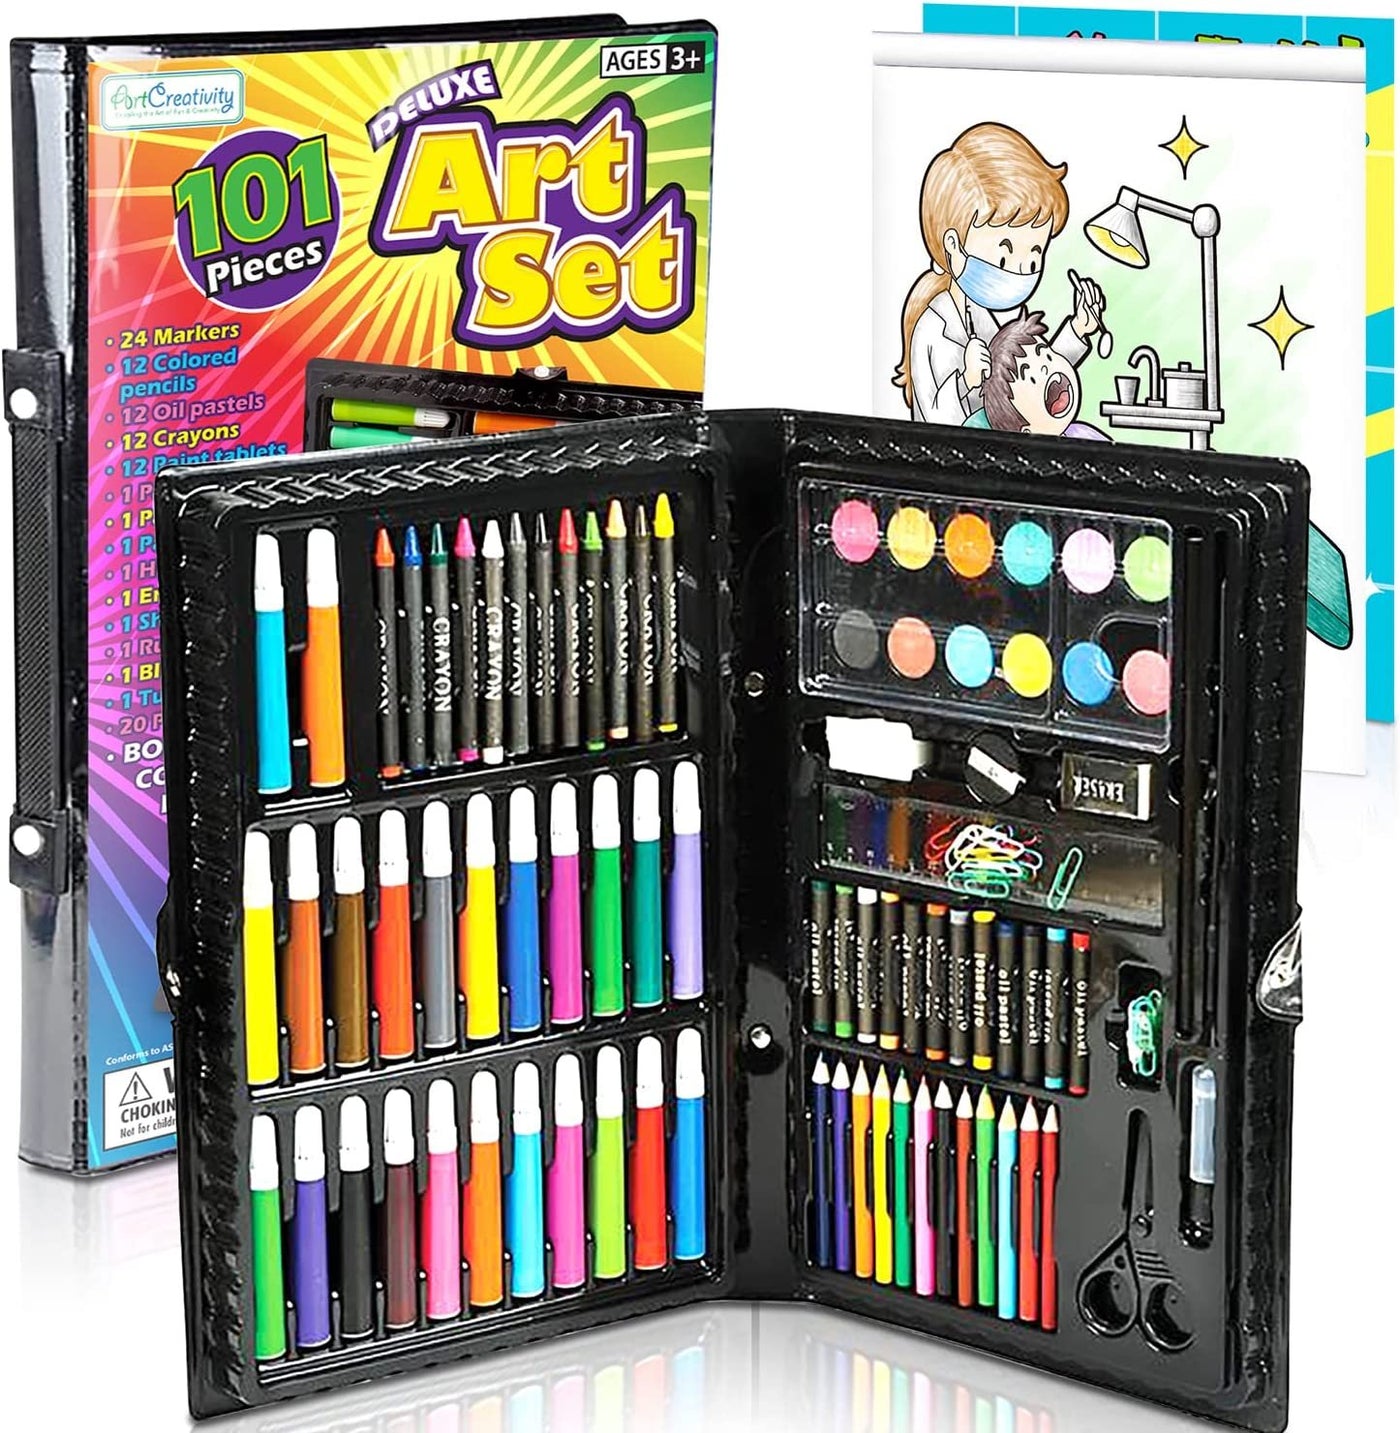 The Kids Crayon Kit